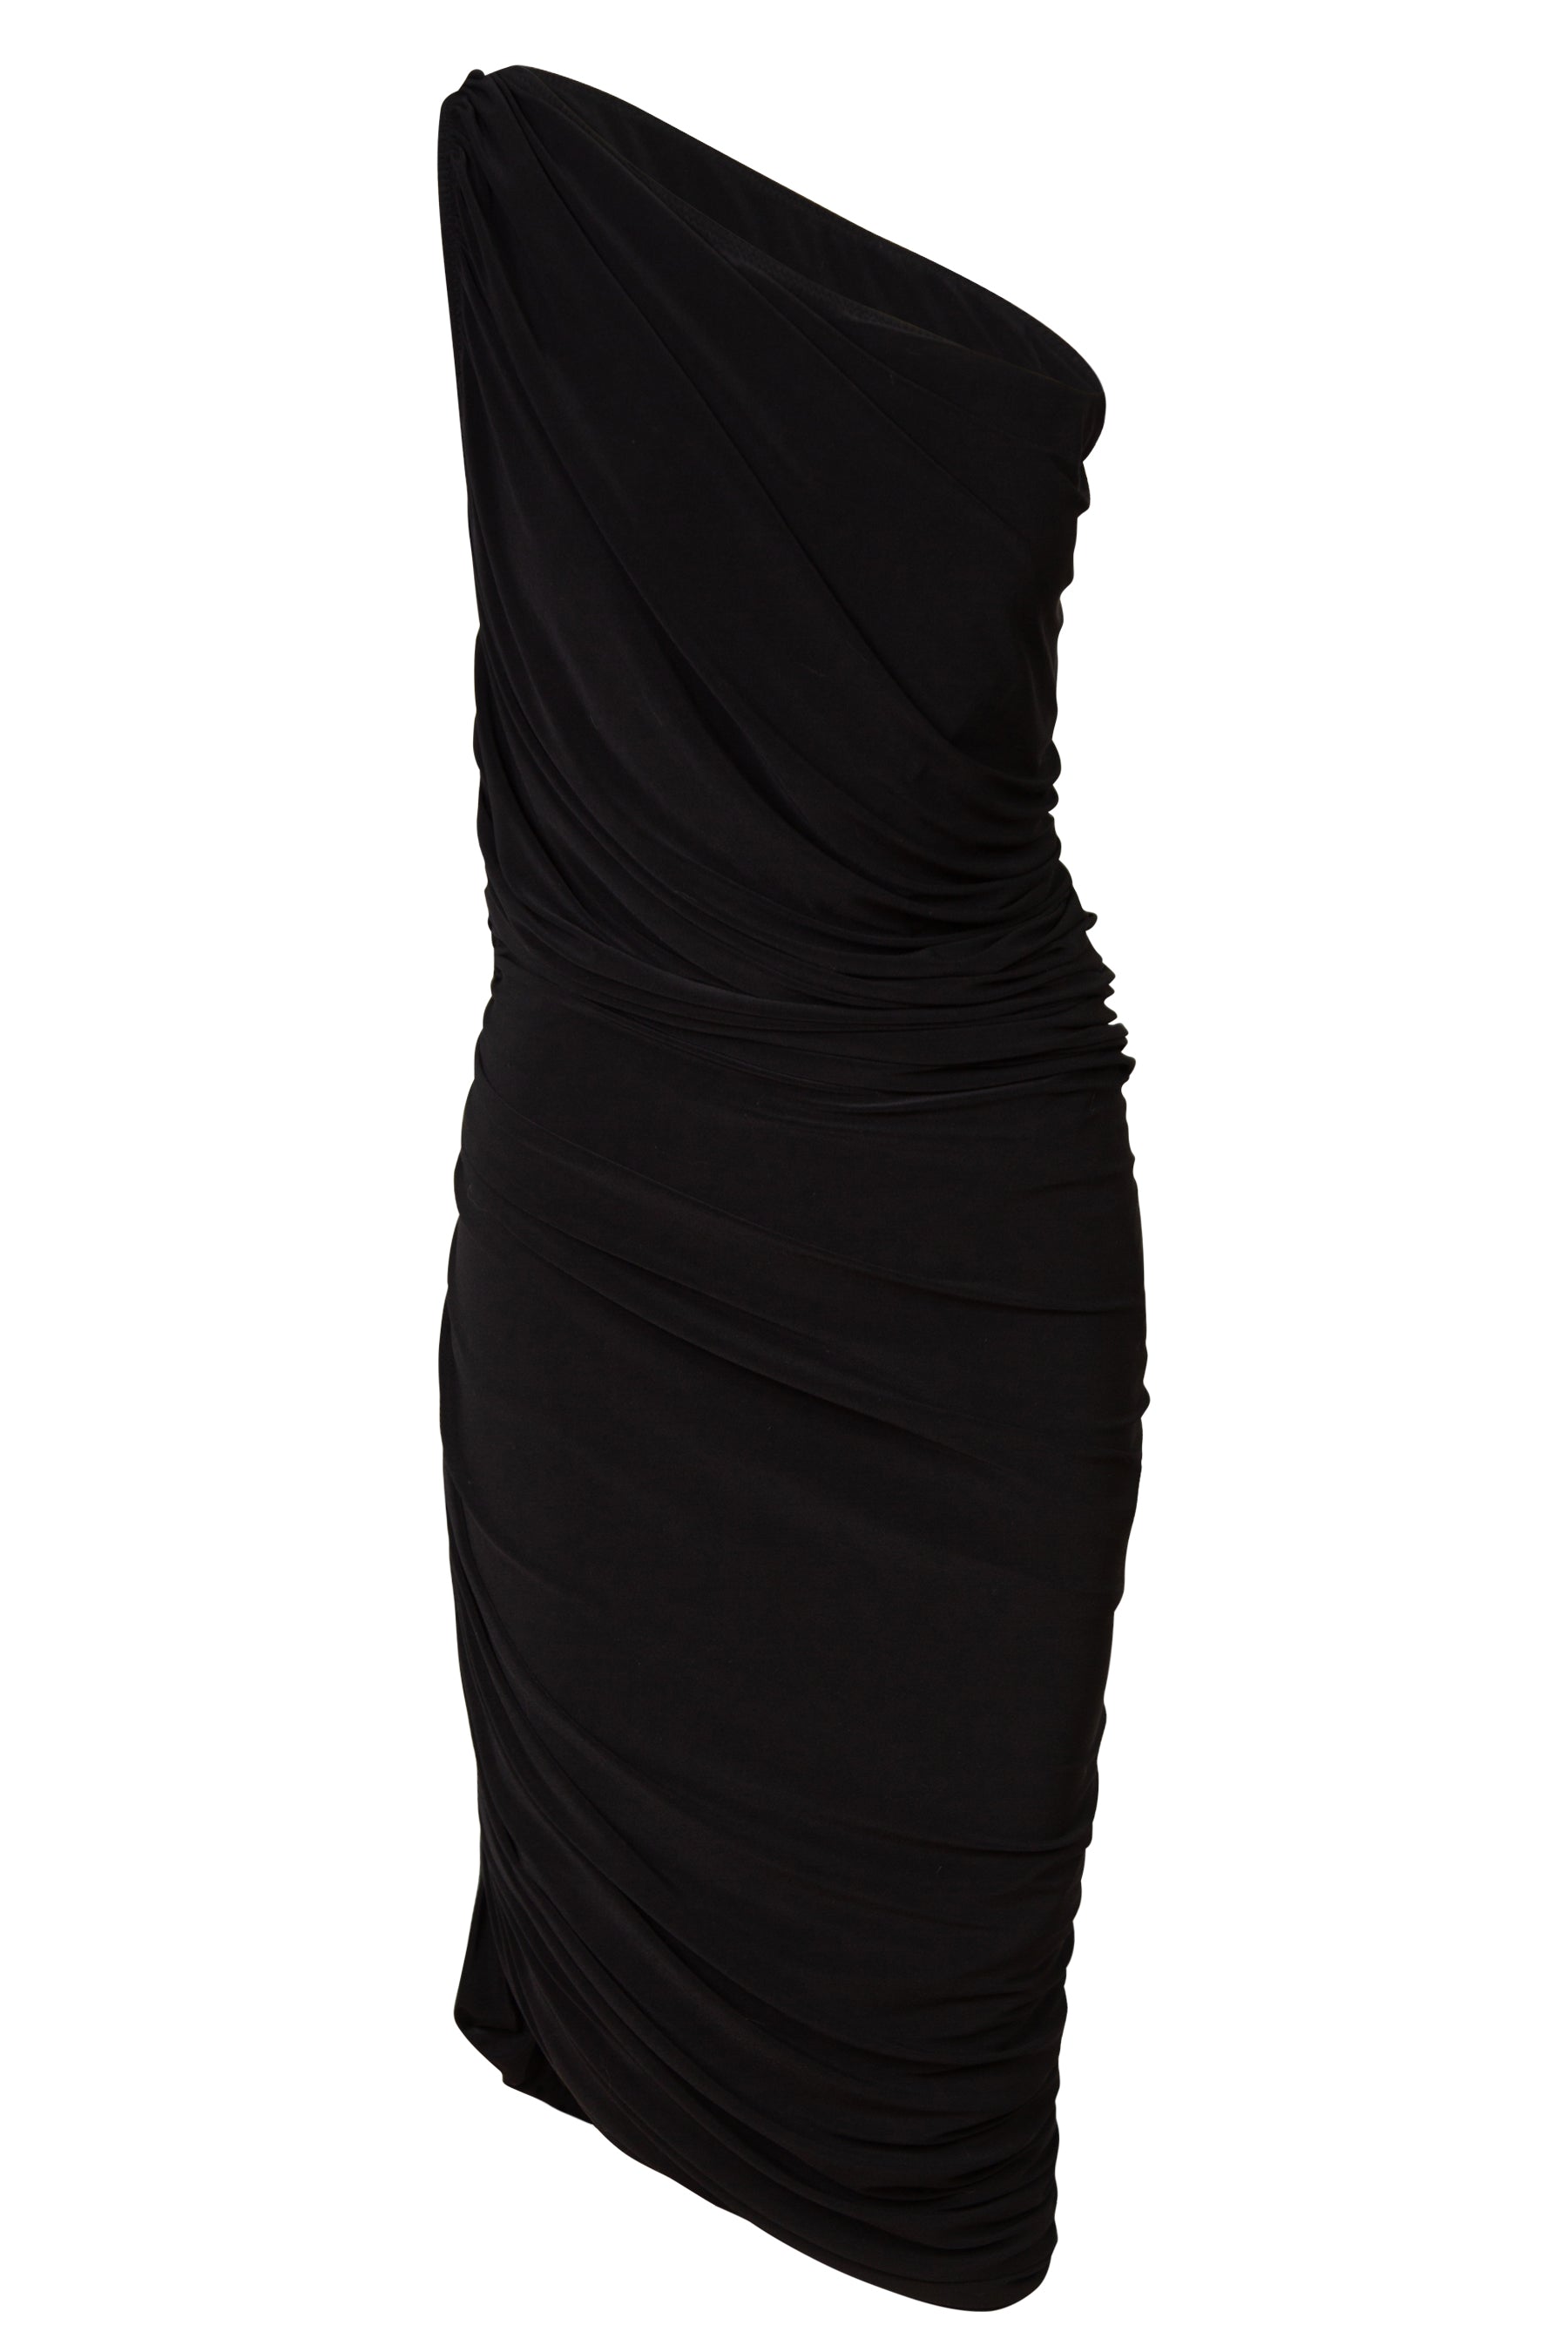 Norma Kamali Diana Gown in Black | (est. retail $215) – Dora Maar